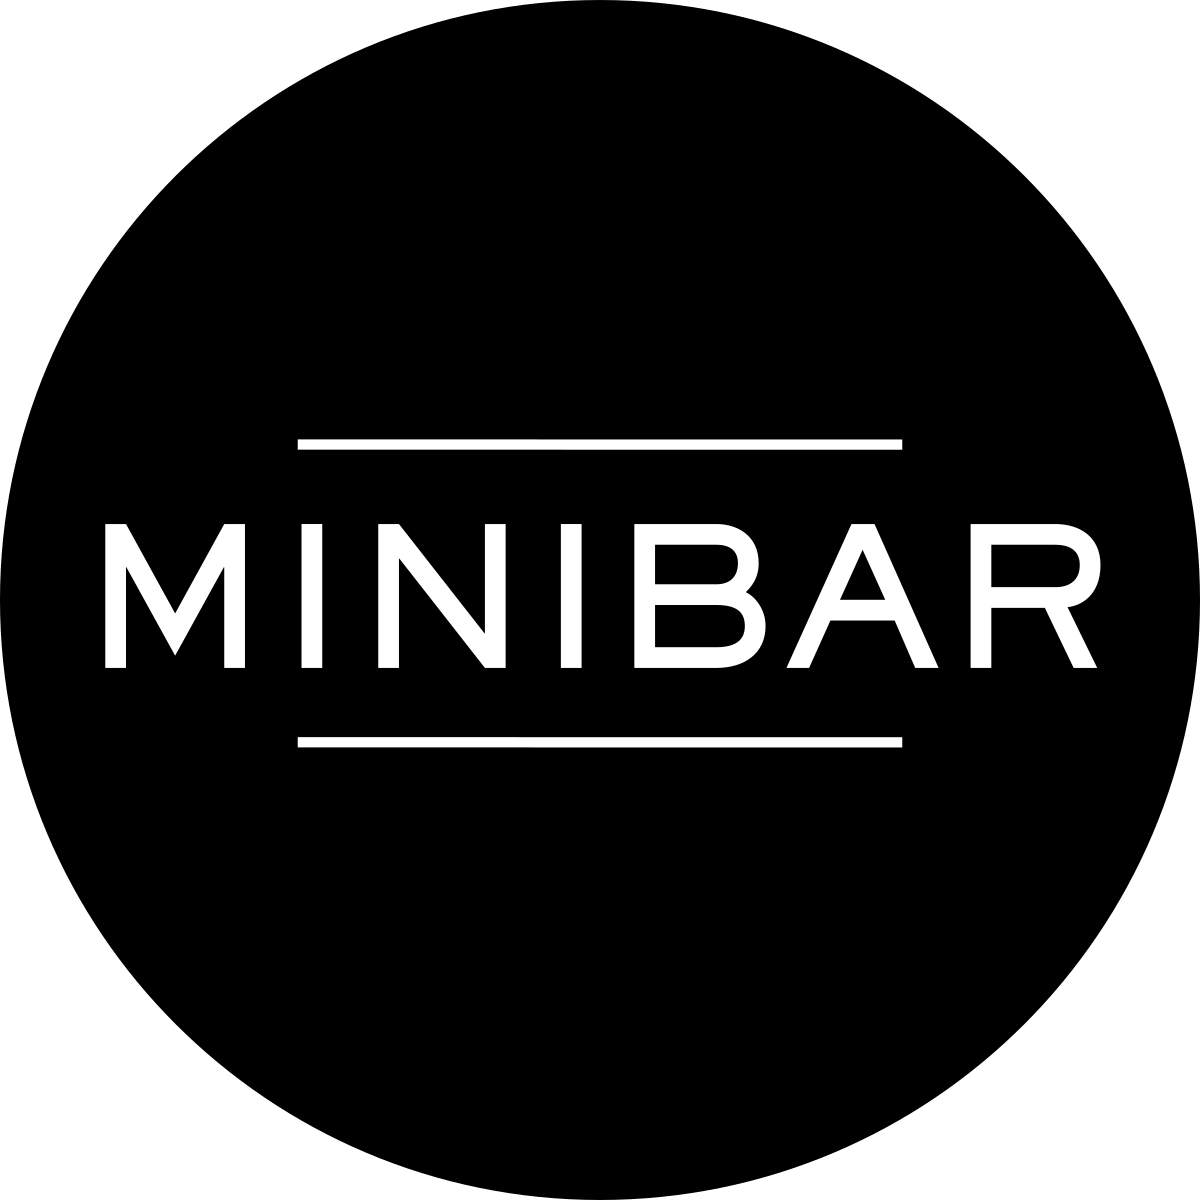 Minibar Delivery - Wikipedia